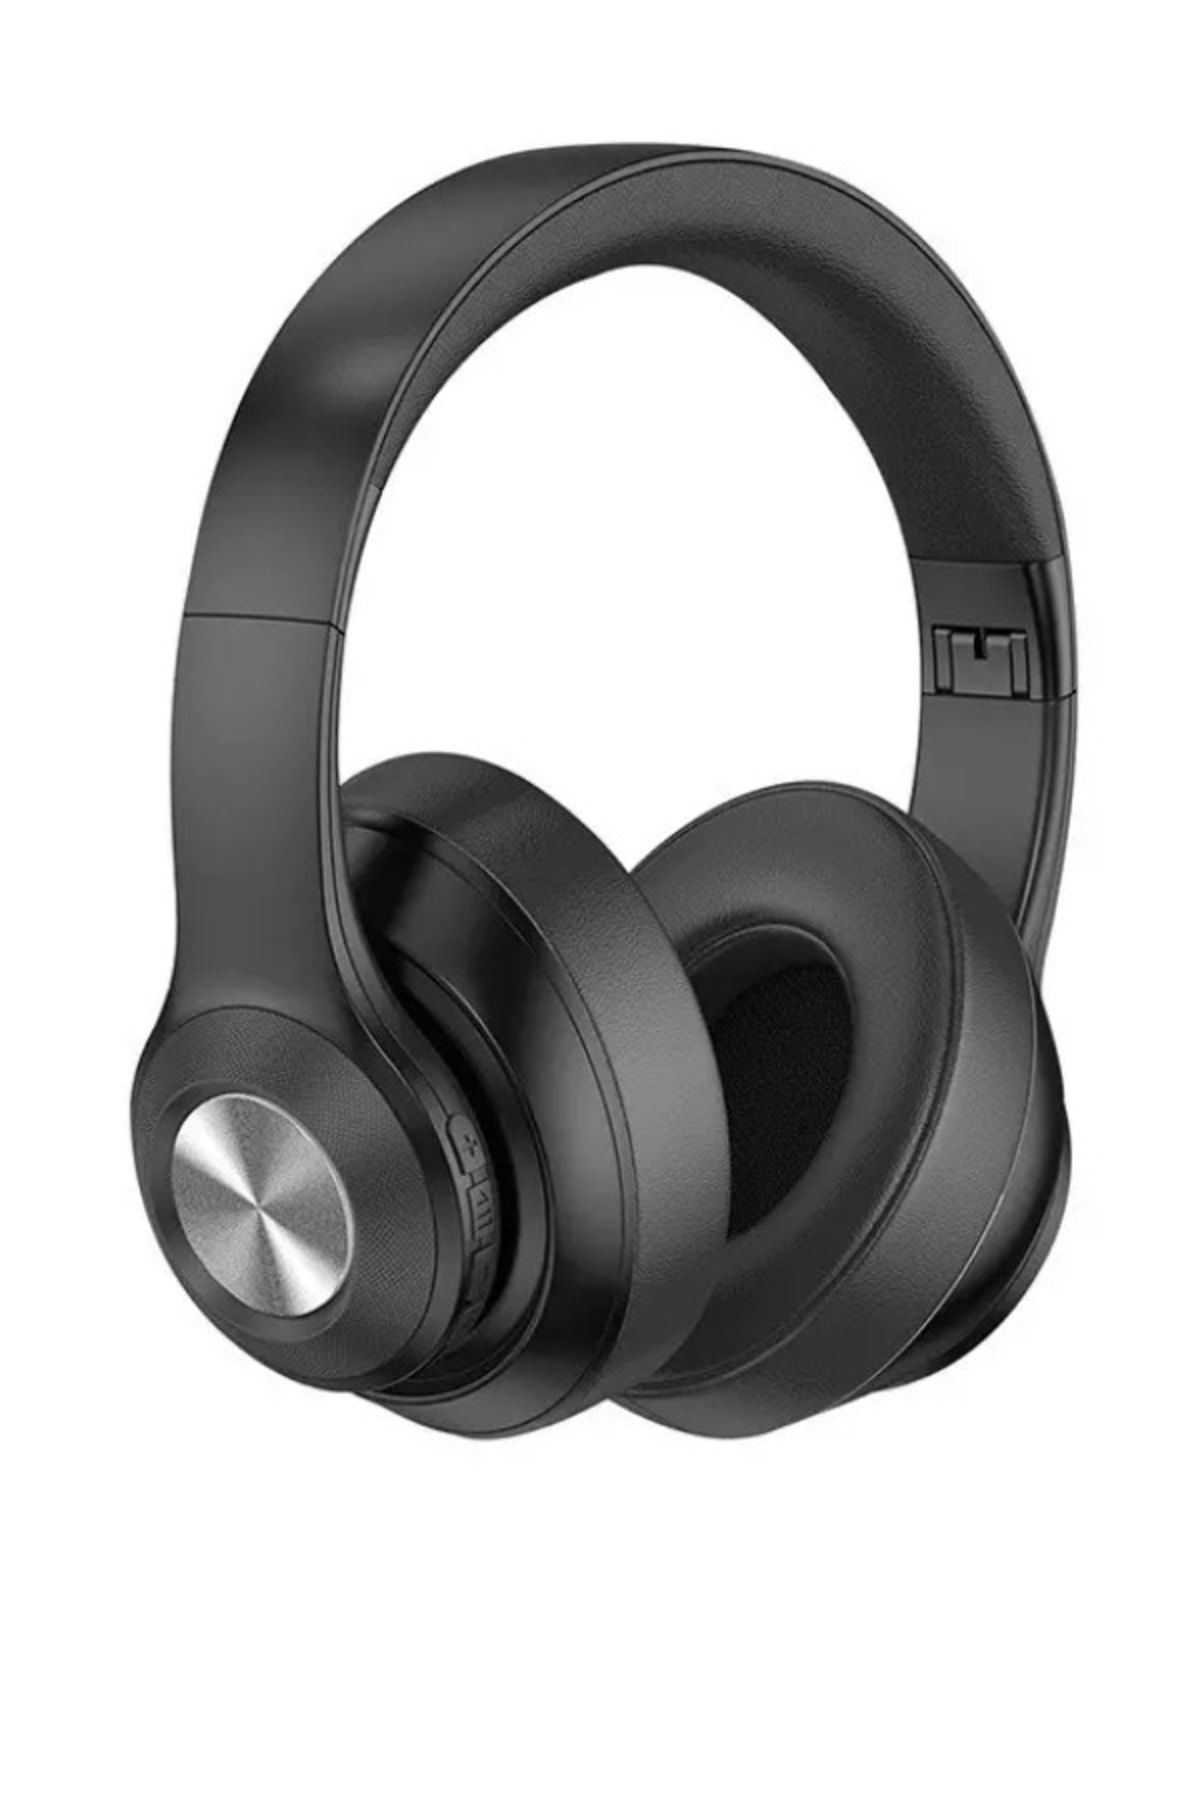 Teknoloji Gelsin Sn-85 Kulaklık Anc 6d Stereo Süper Bass Kablosuz Bluetooth Kulaküstü Kulaklık Fm Sd